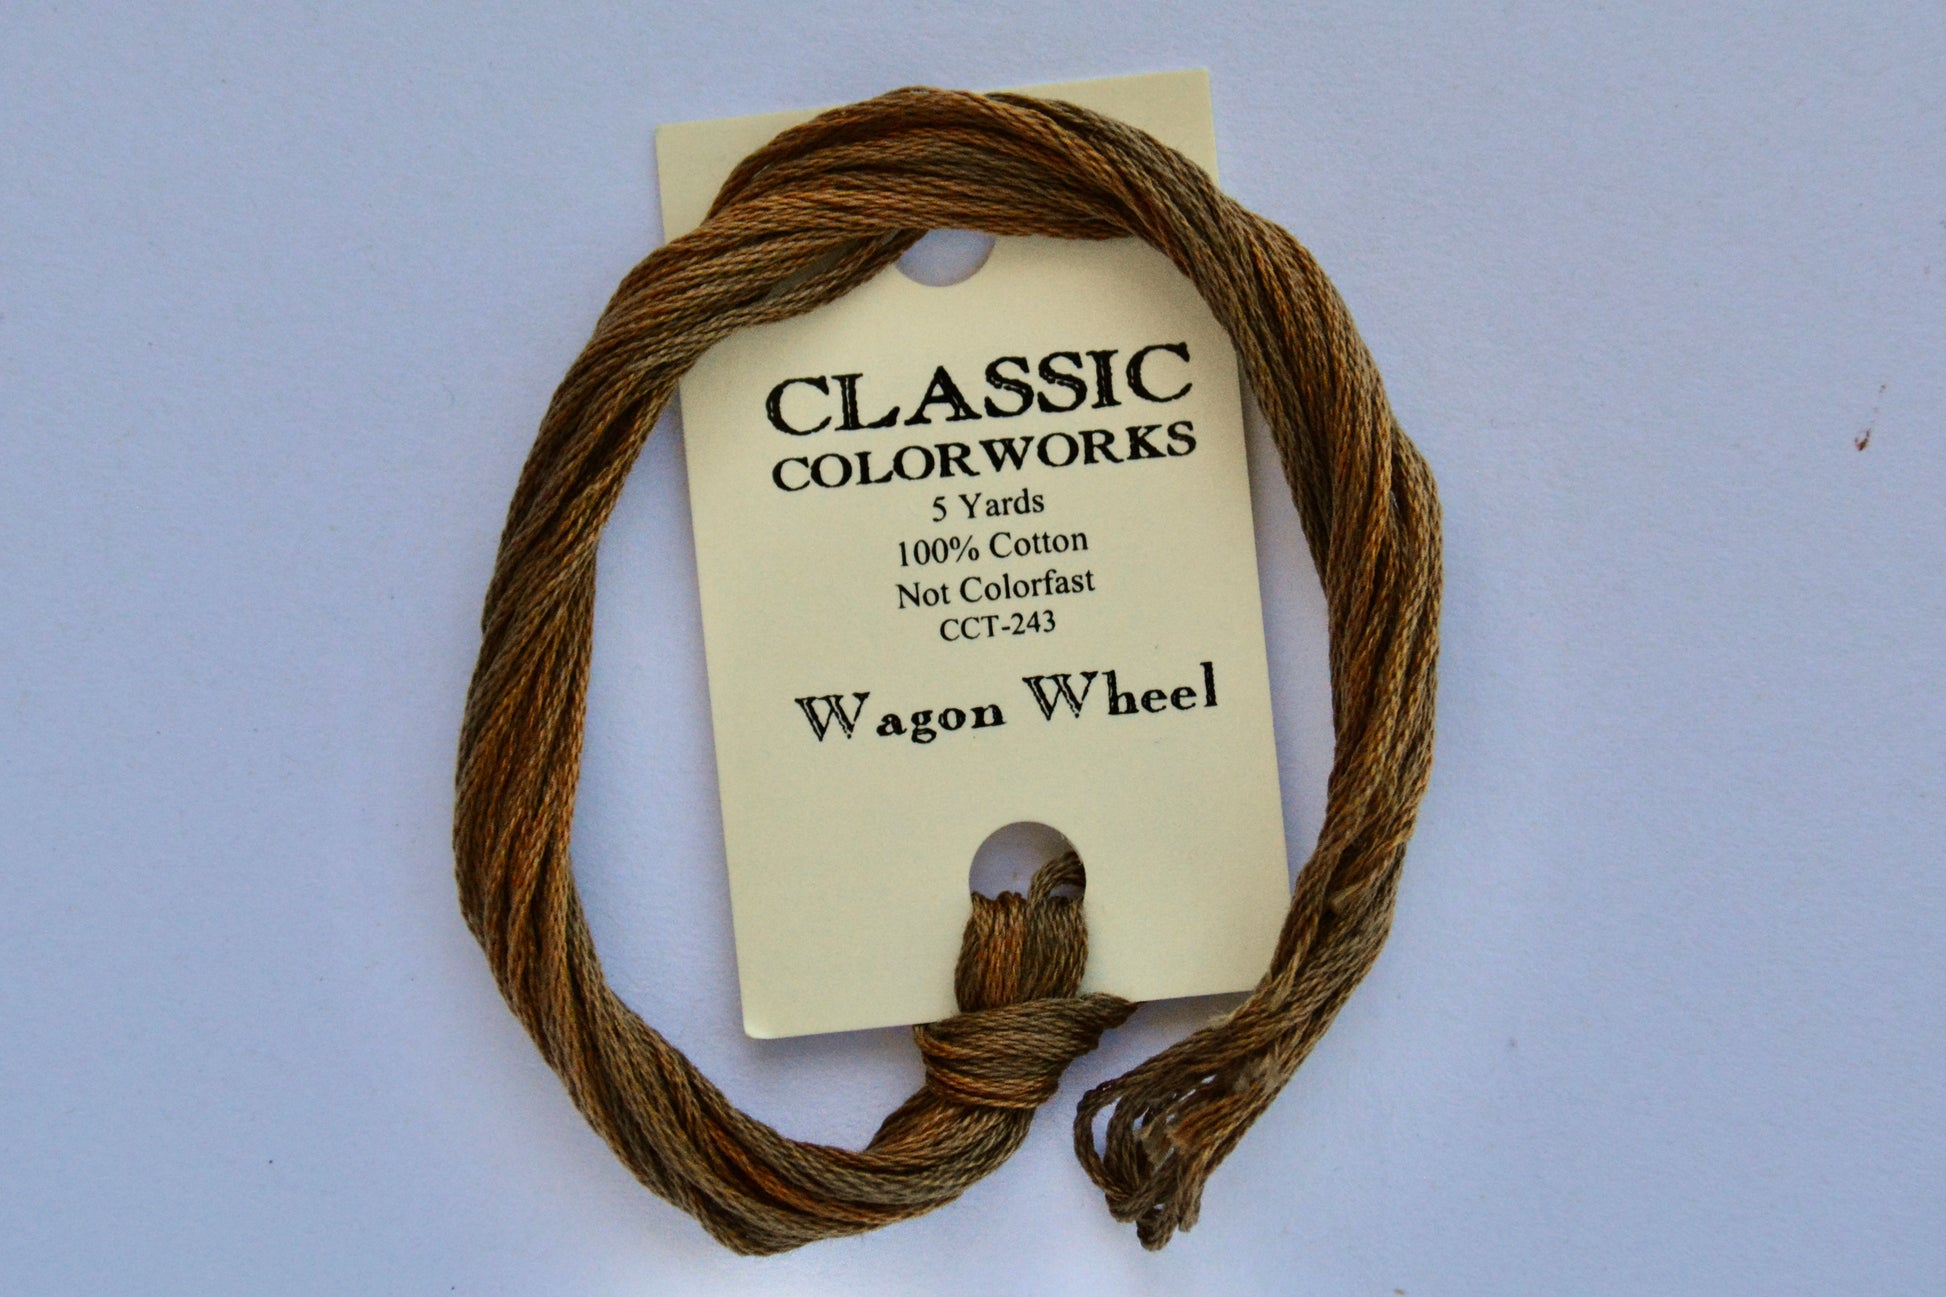 Classic colorworks wagon wheel CCT-243